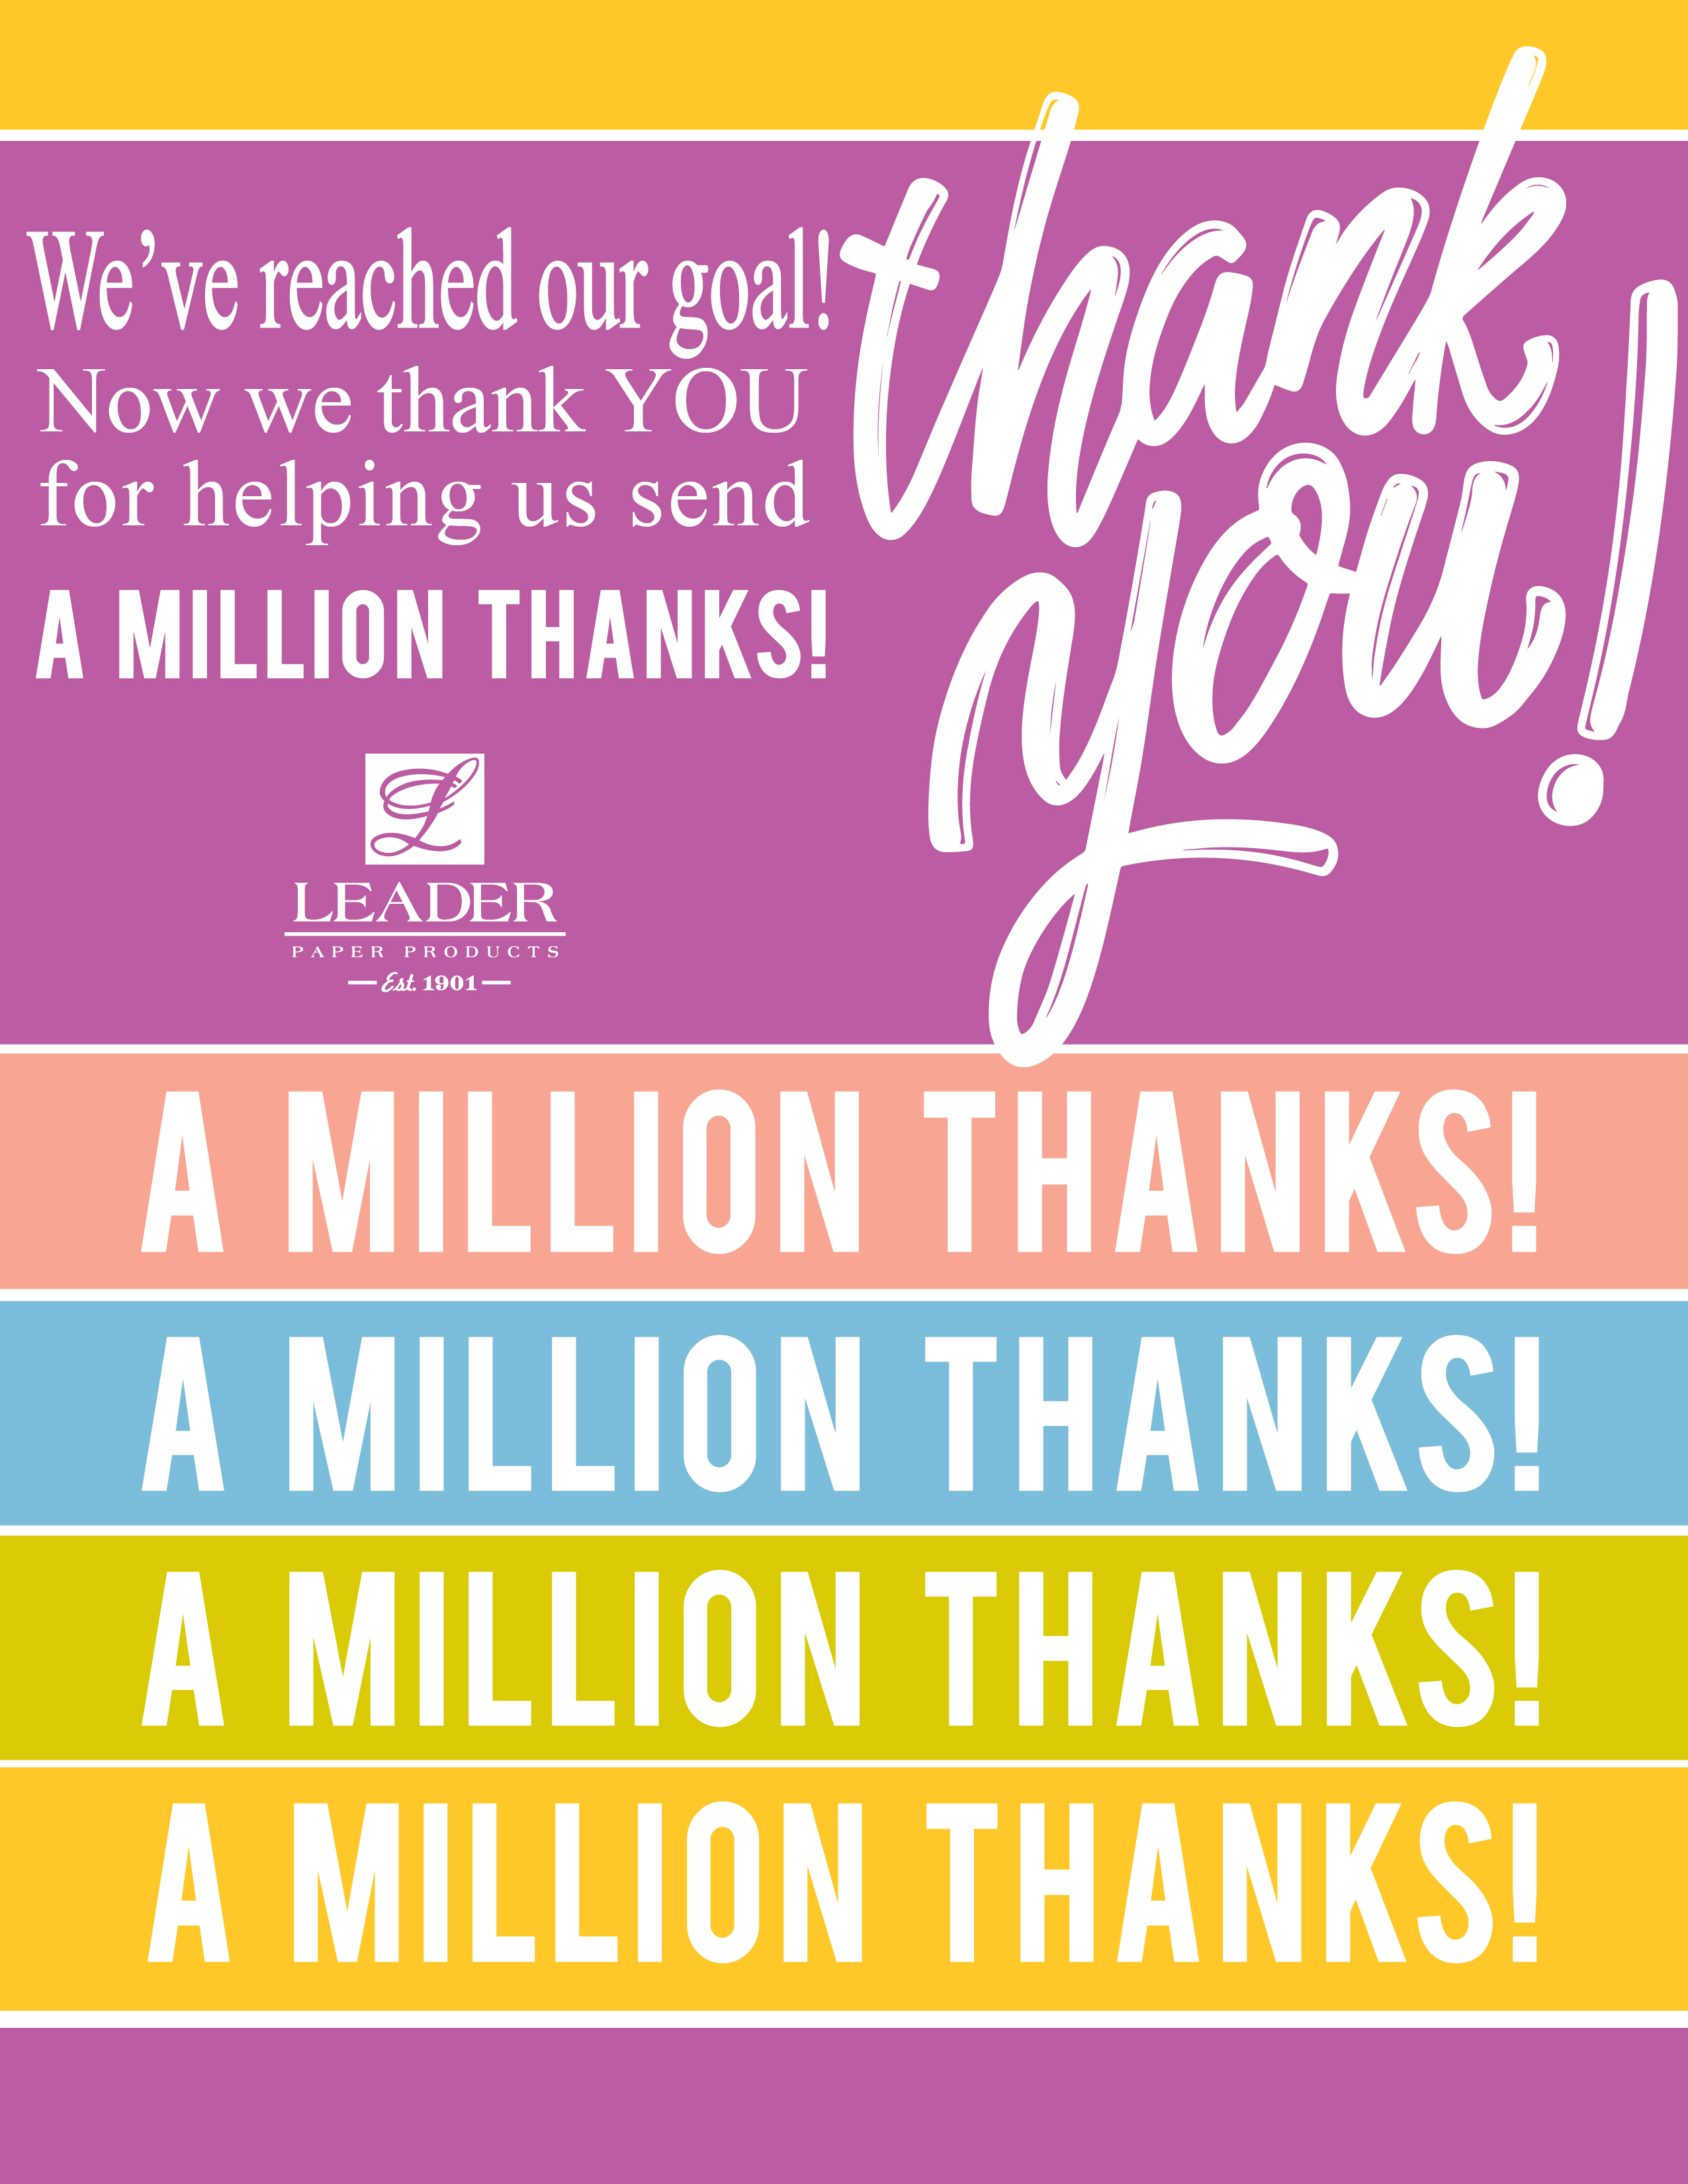 A million thanks!